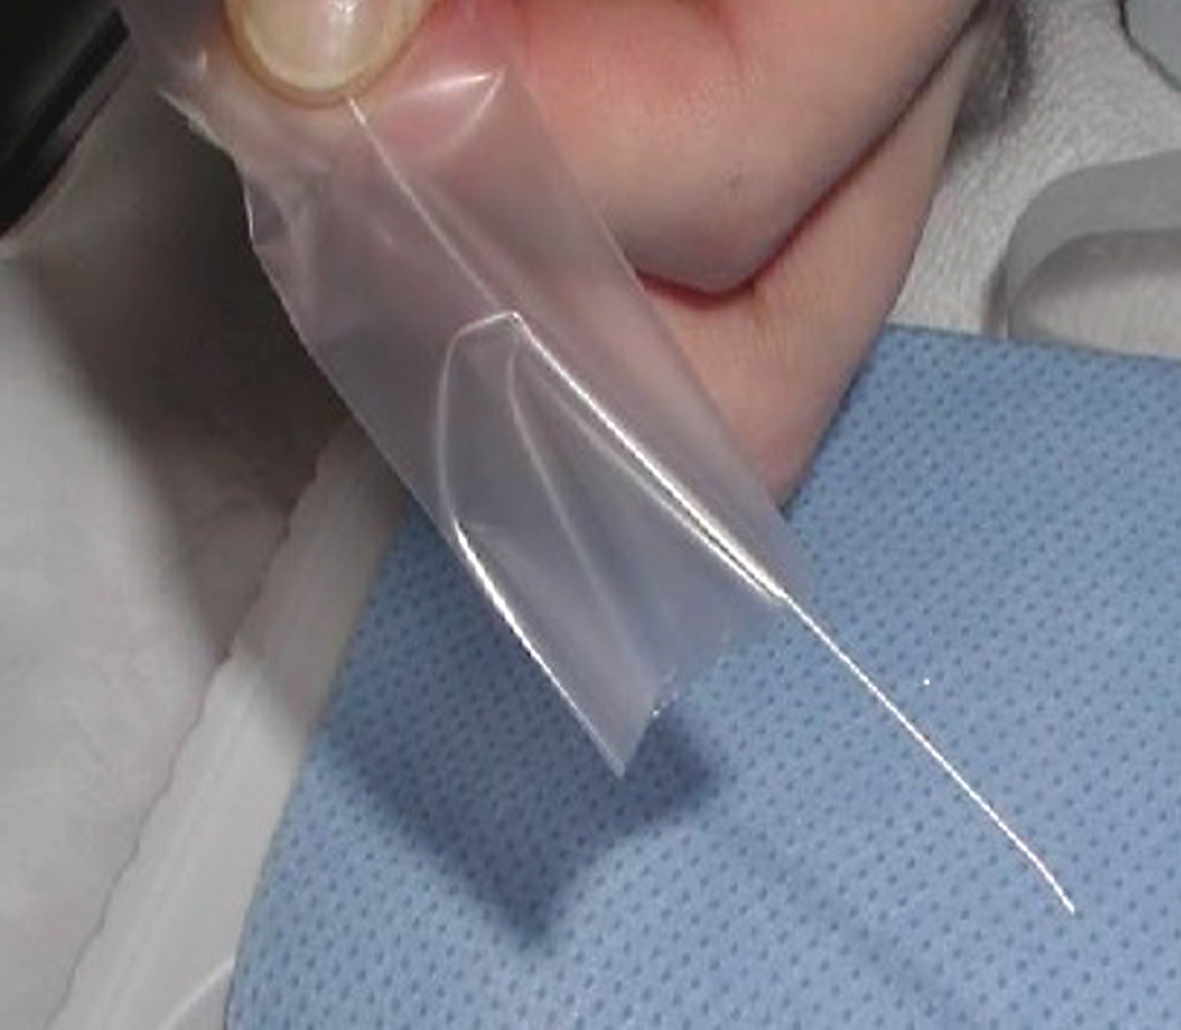 Double lumen catheter (Argyle™).